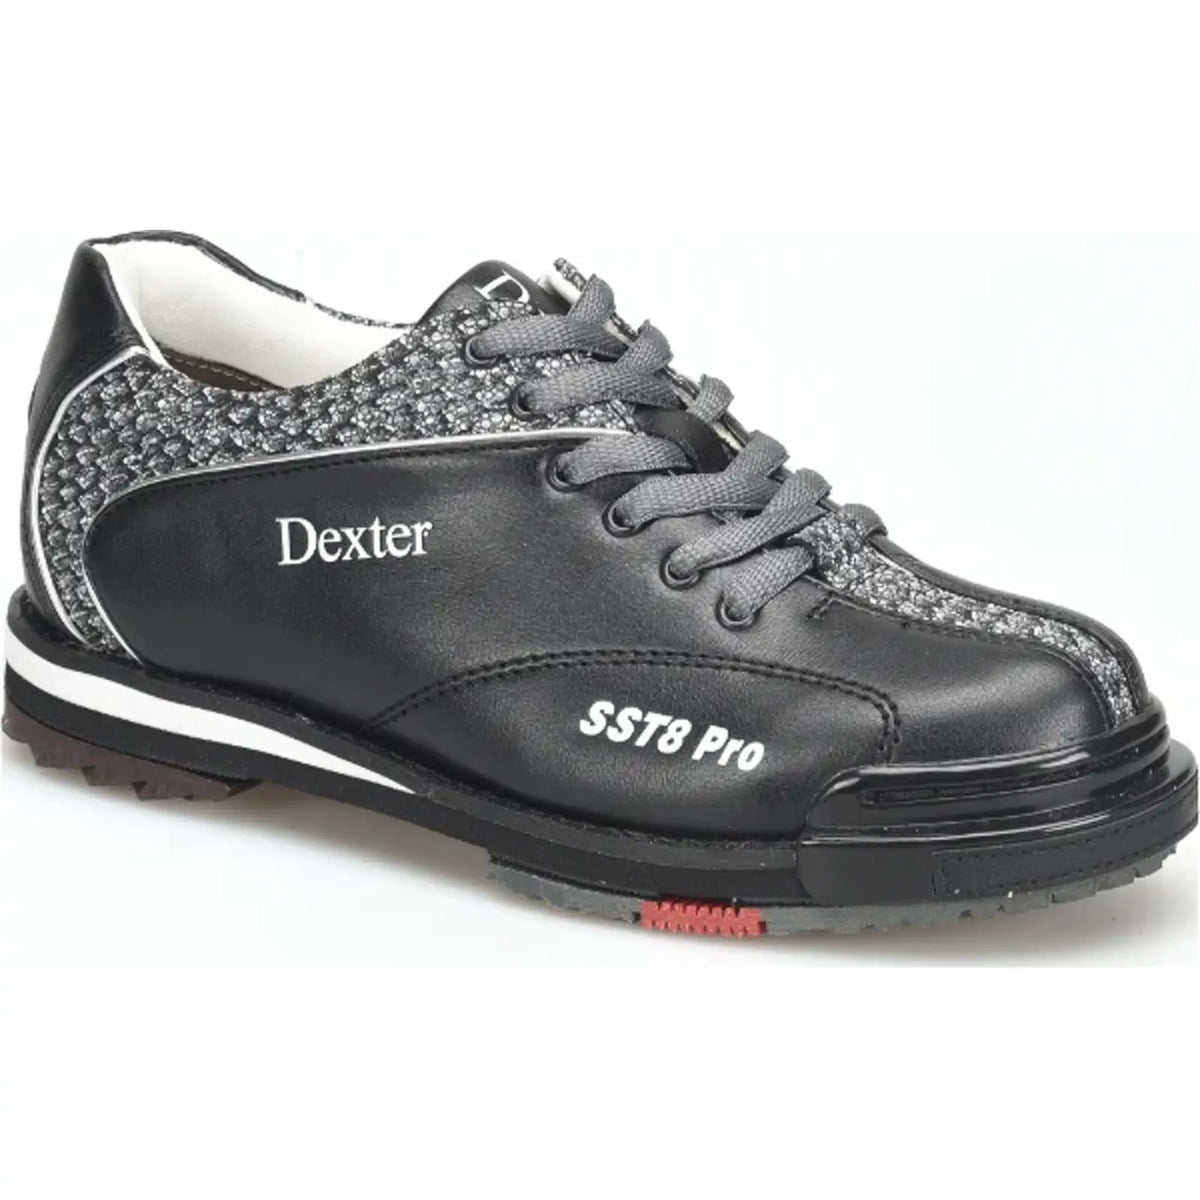 Sst 8 Pro Black/ Grey Shoes